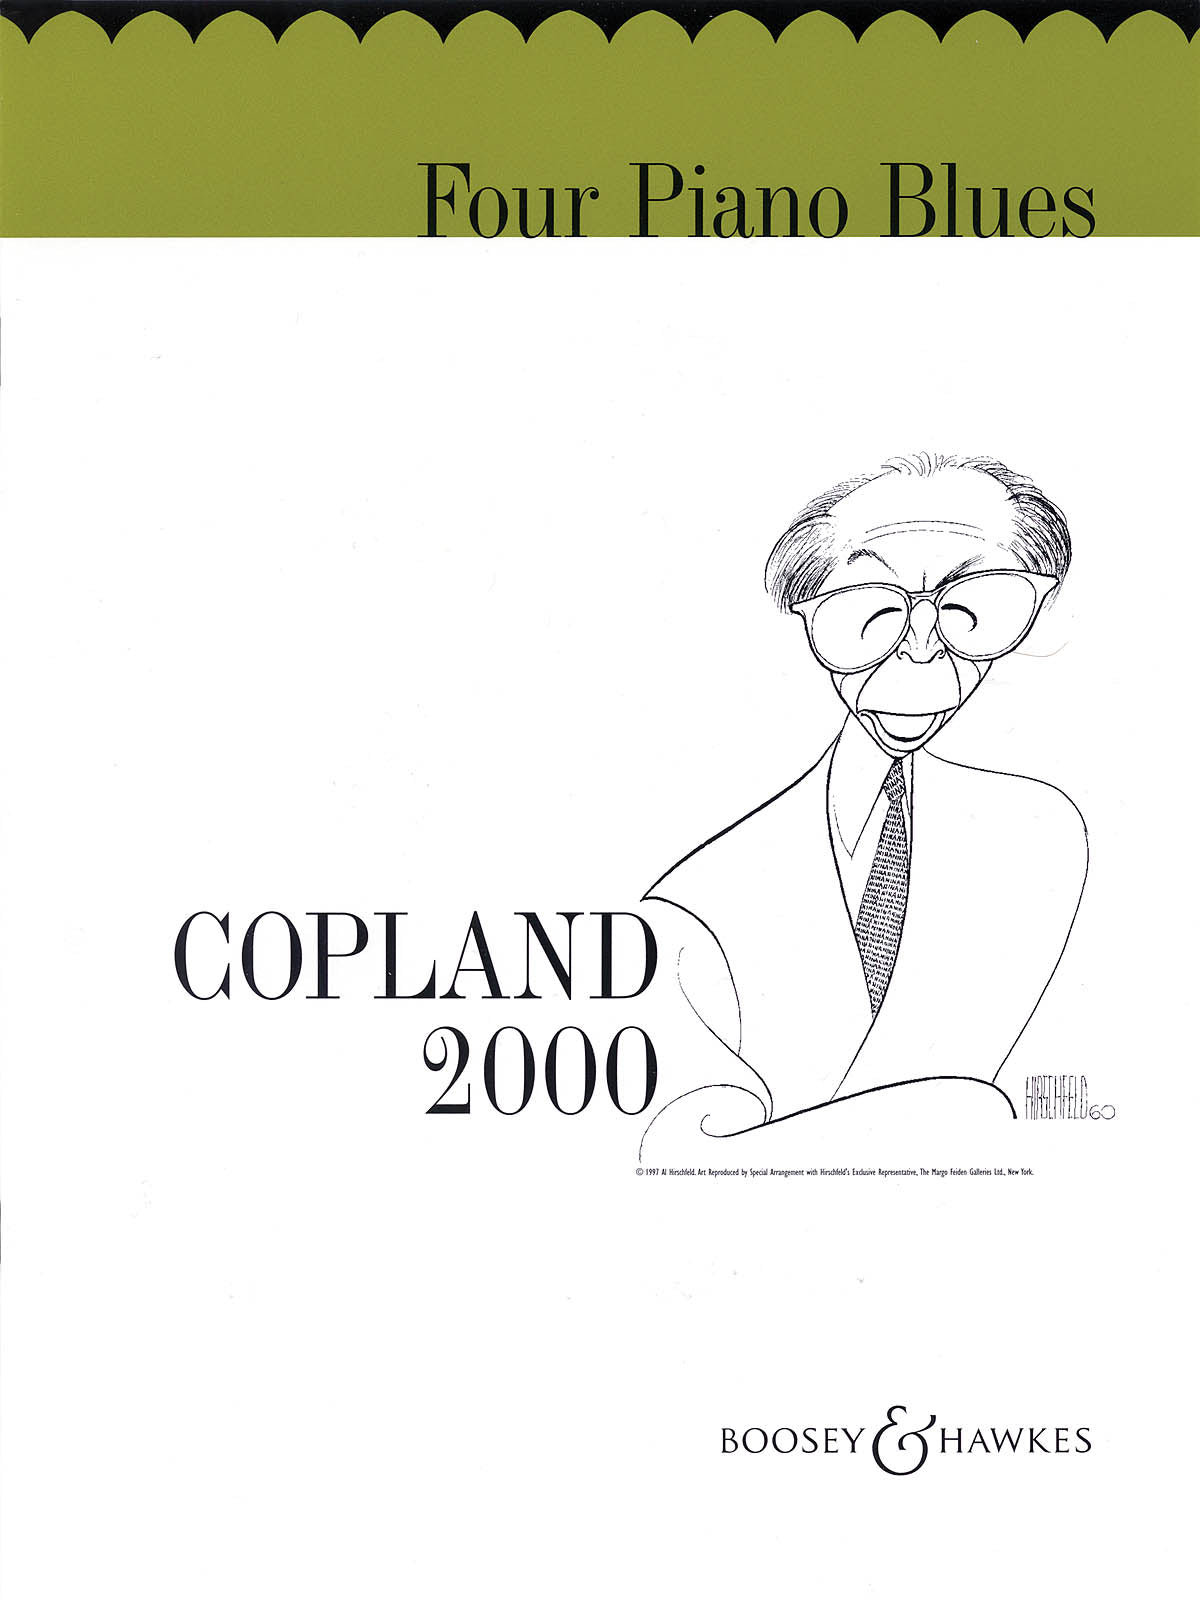 Copland: Four Piano Blues